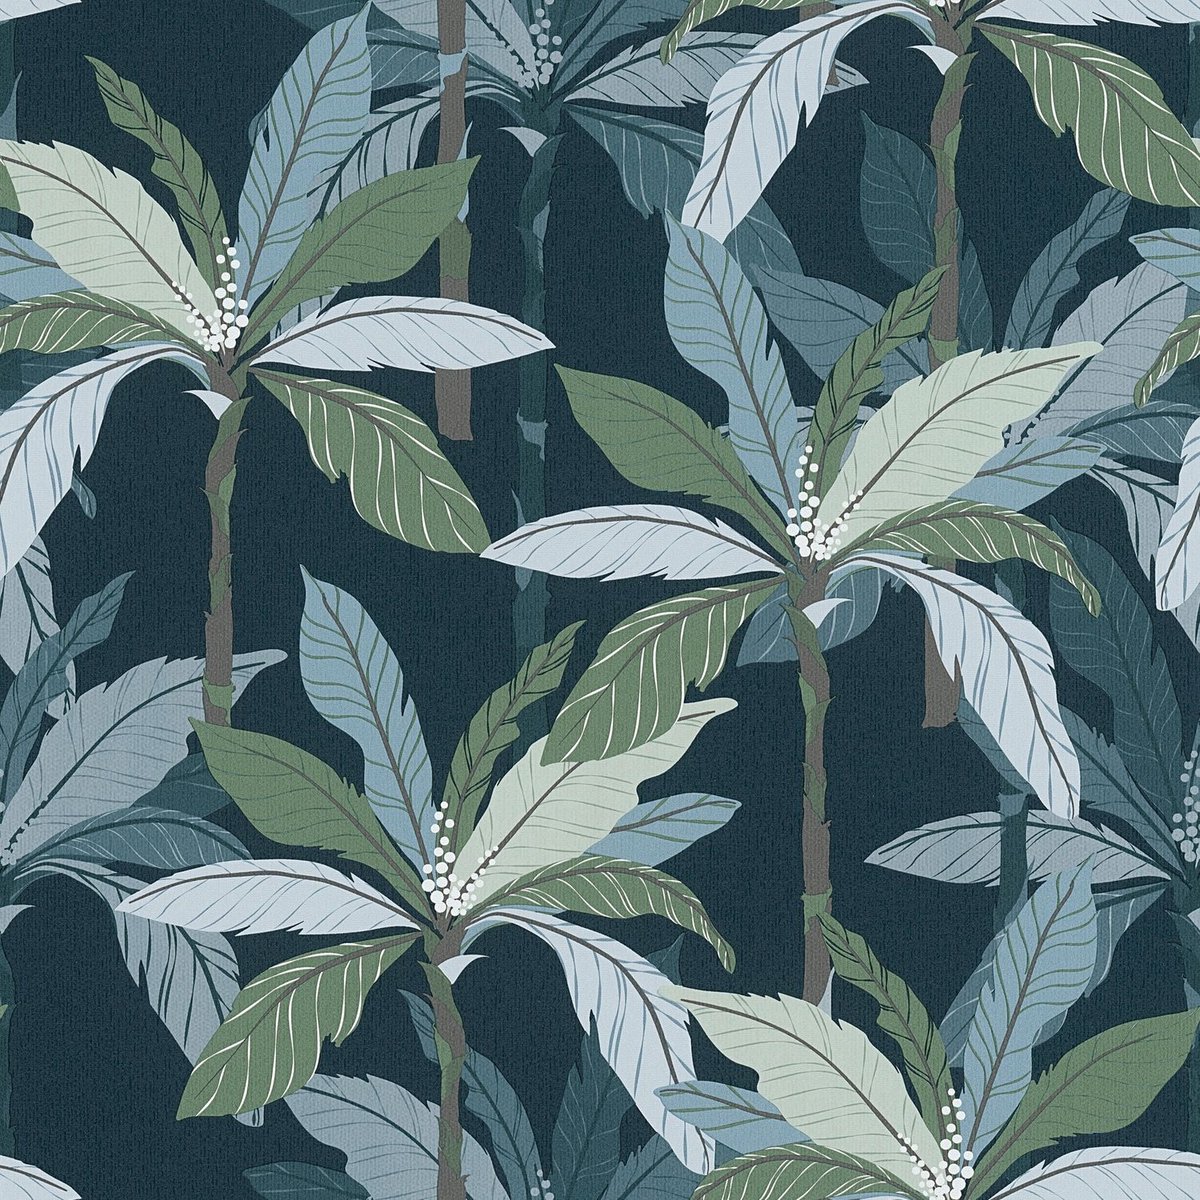 Natuur behang Profhome 375306-GU vliesbehang glad met palmen mat groen blauw 5,33 m2